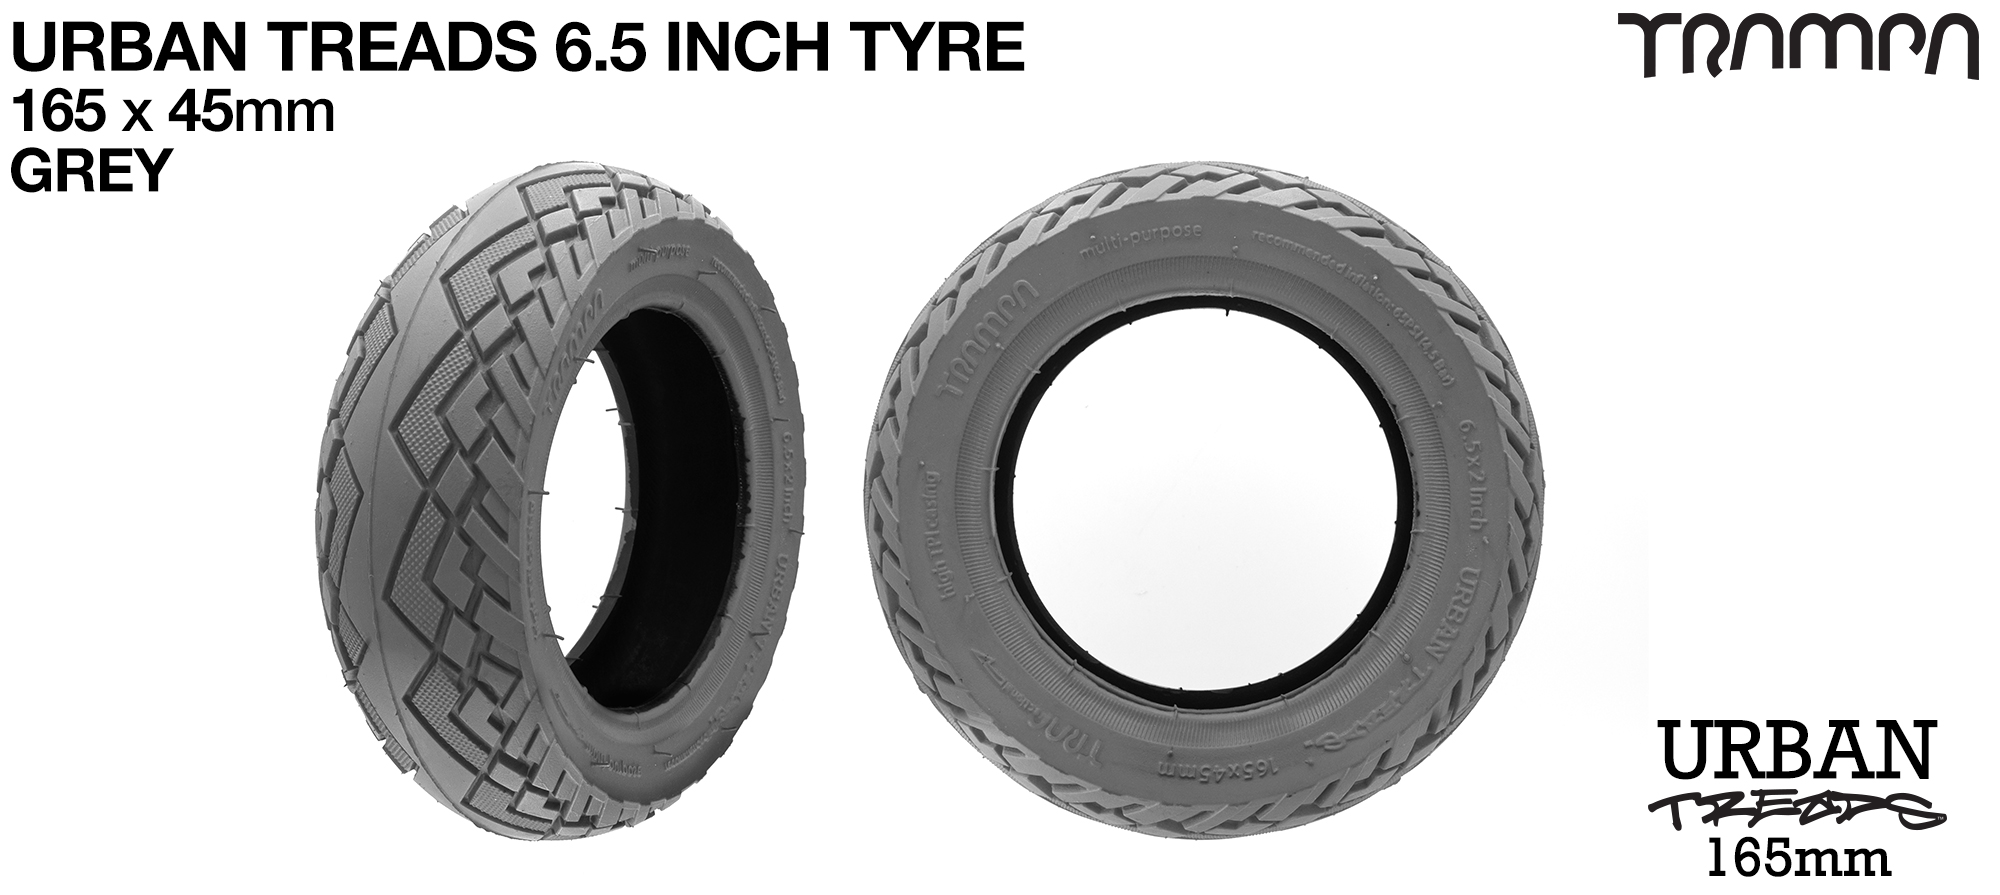 URBAN Treads Tyre - DARK GREY x4 